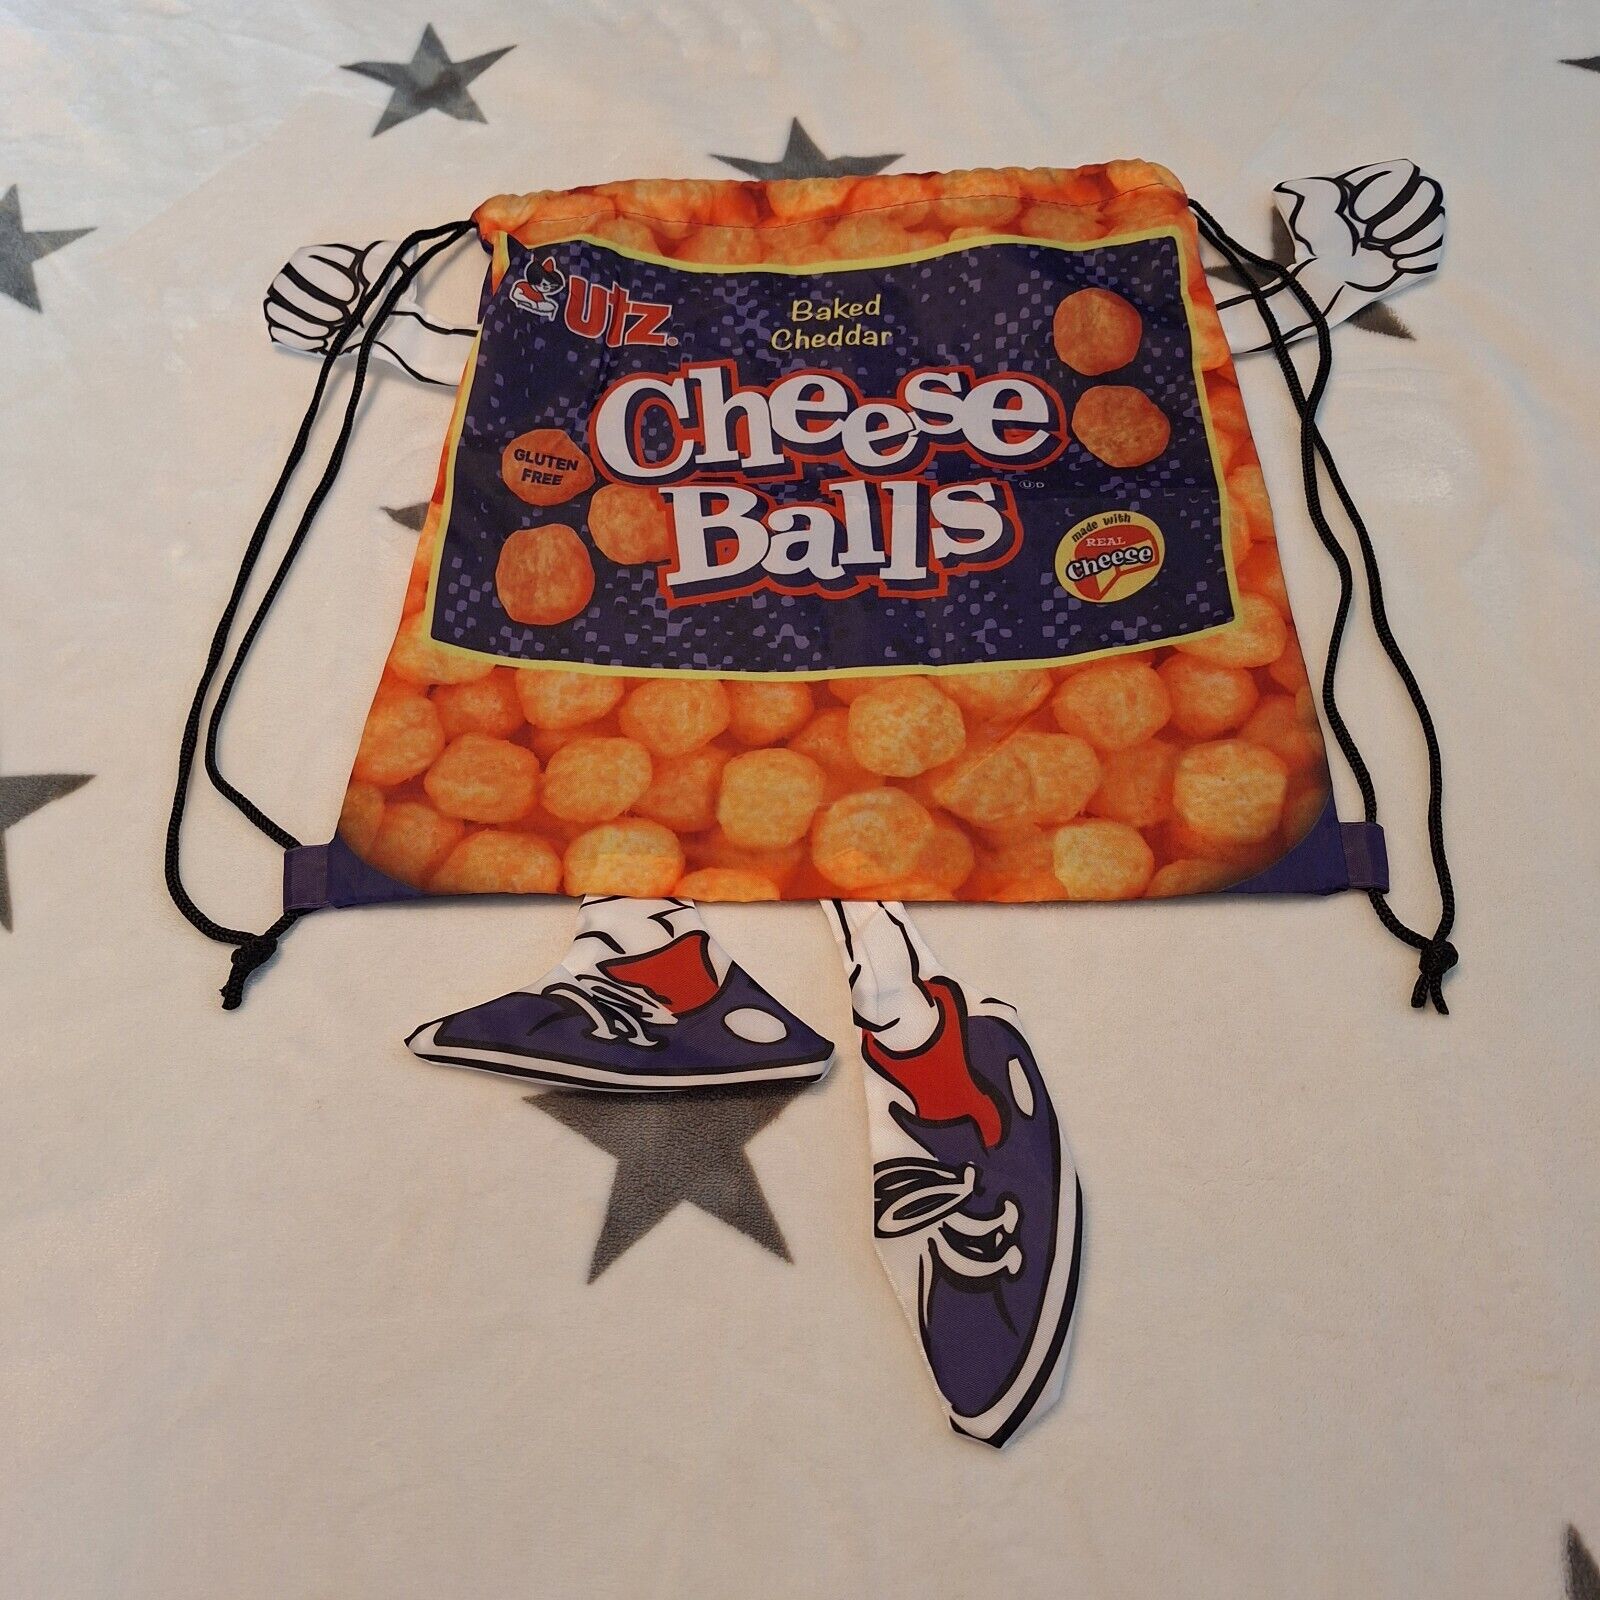 2012 Utz Cheddar Cheese Balls Drawstring Backpack Novelty Promotional Bag Unique